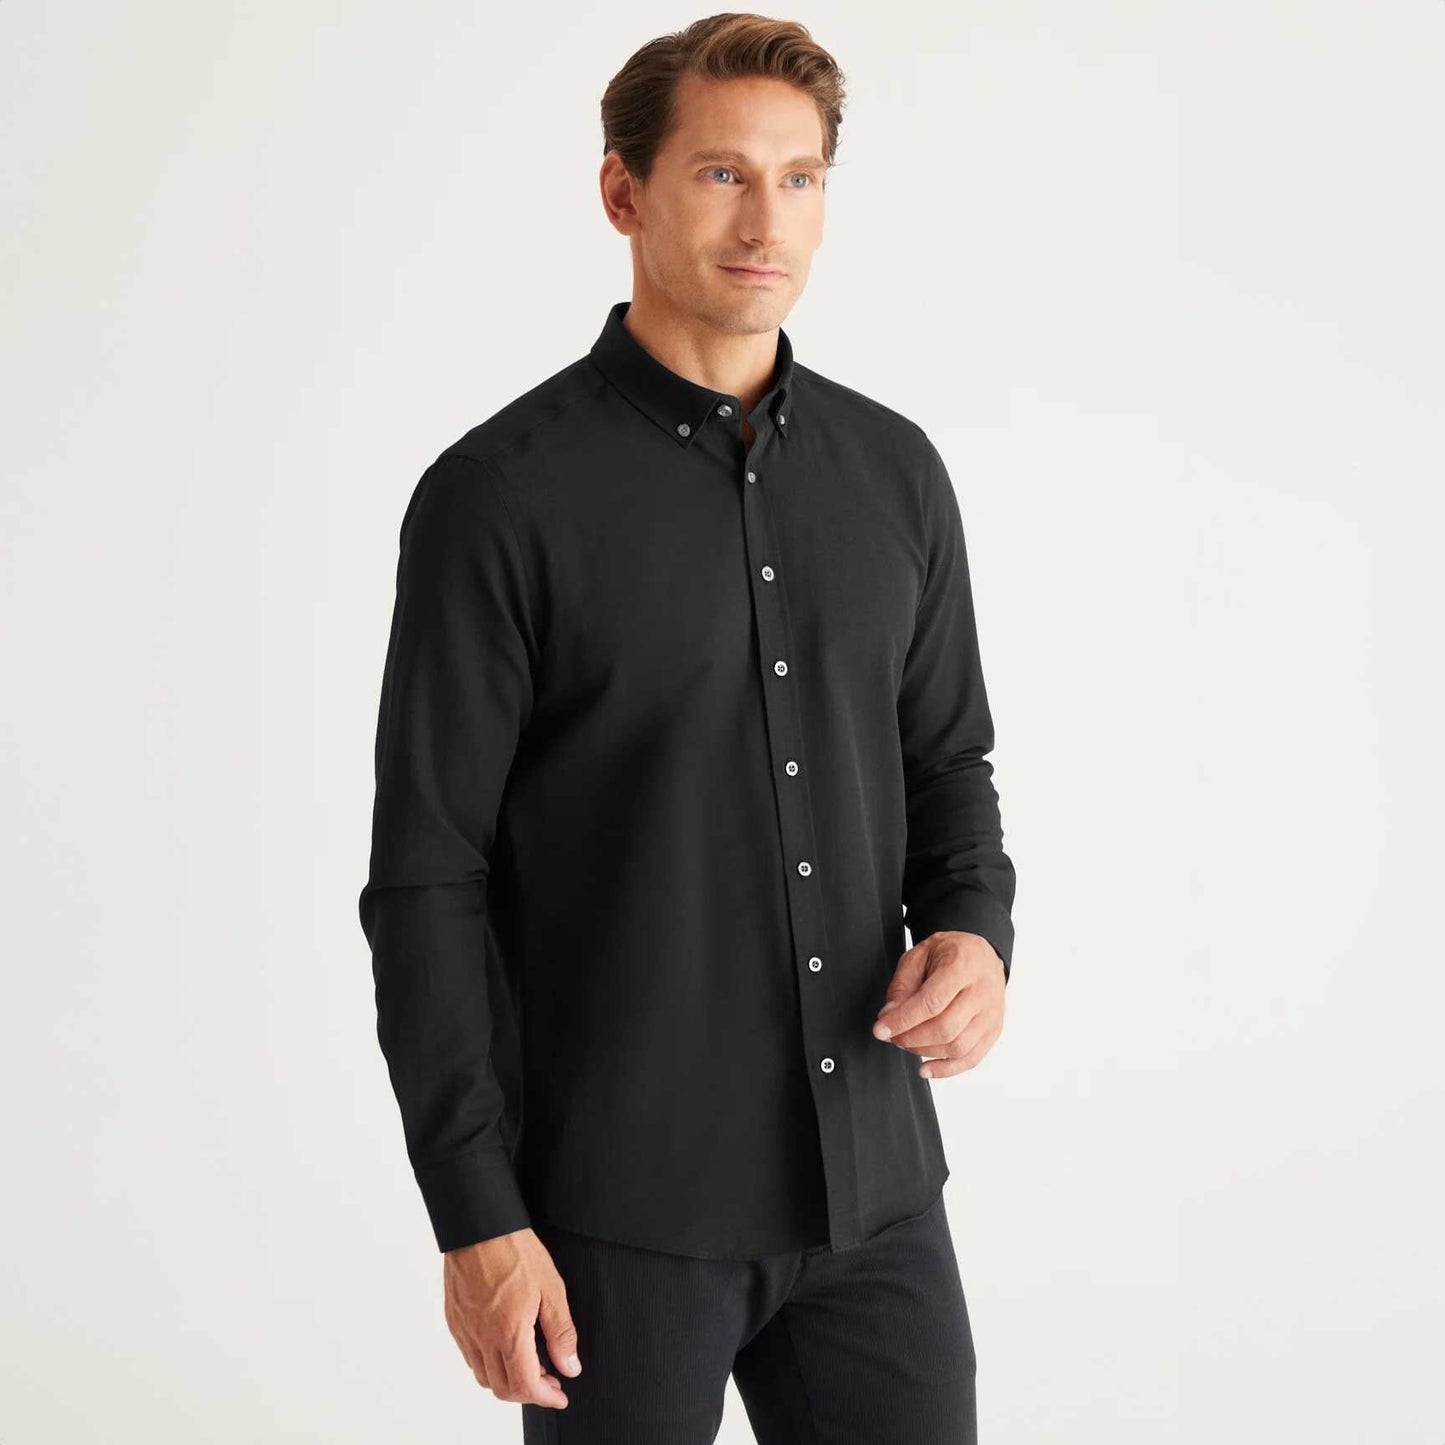 Eternity Men's Solid Design Vantaa Classic Casual Shirt Men's Casual Shirt ETY Black S 